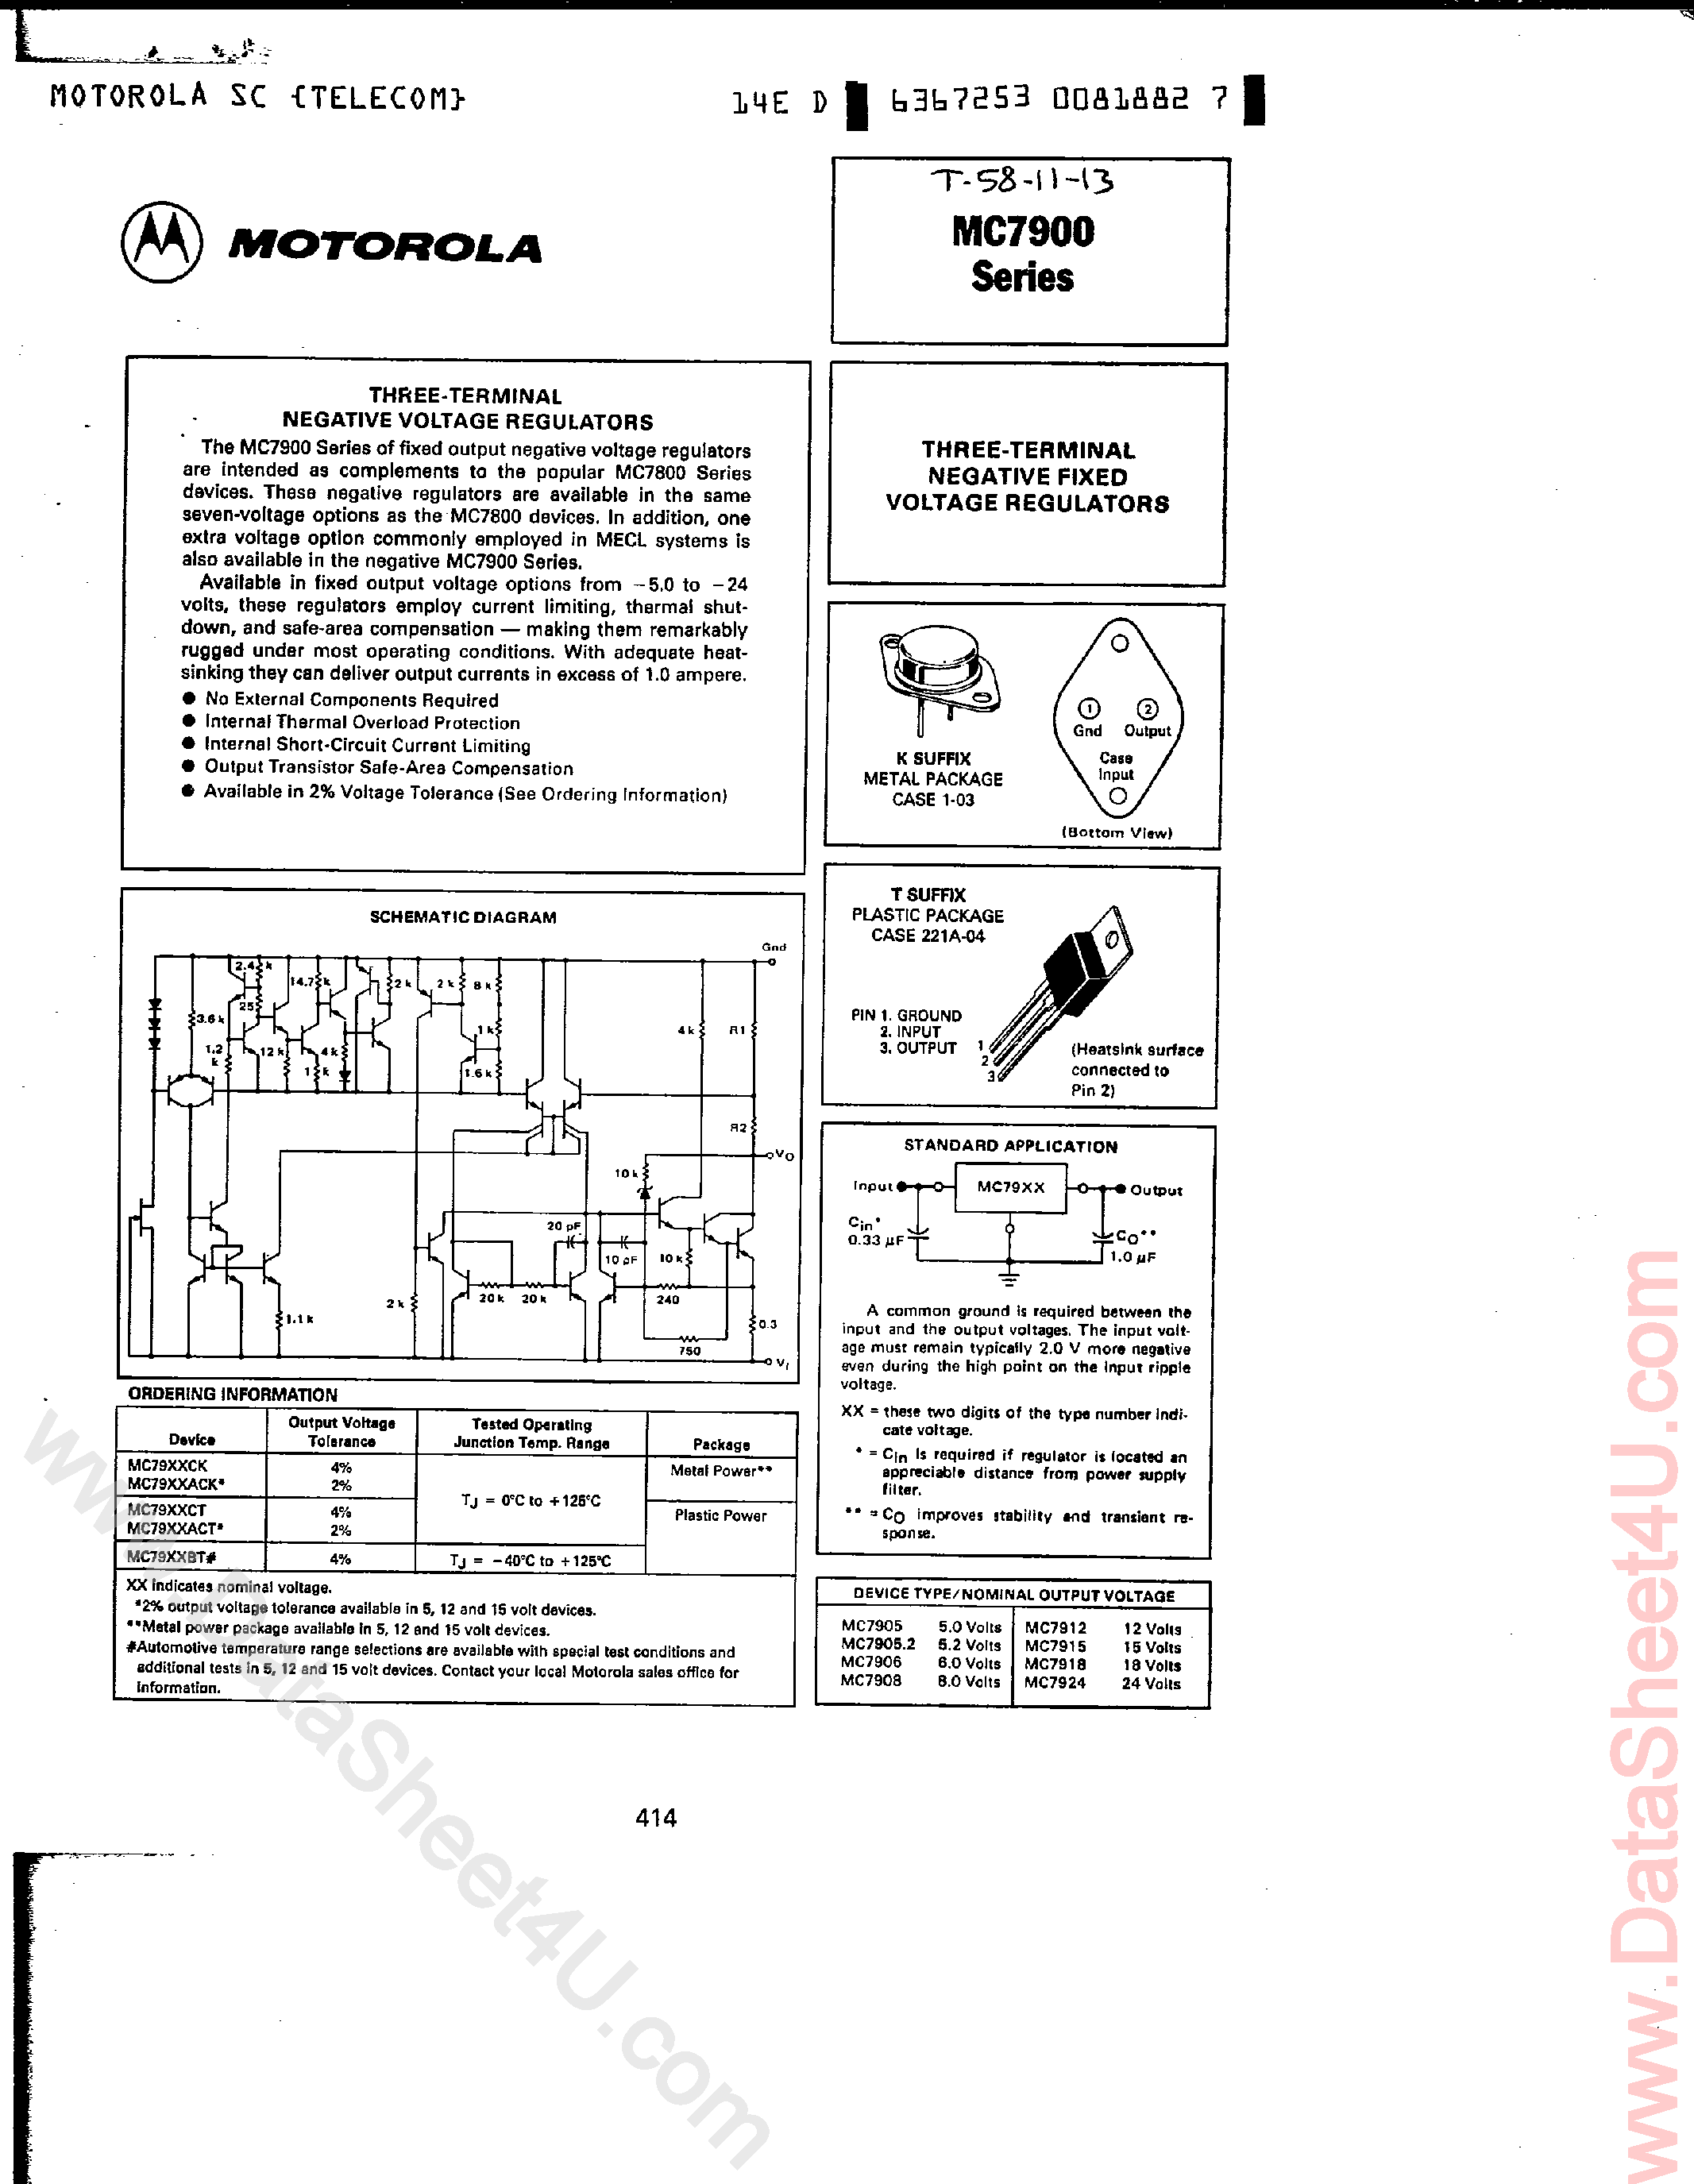 Datasheet MC7905 - MC7900 Series / 3-Terminal Negative Fixed Voltage Regulators page 1